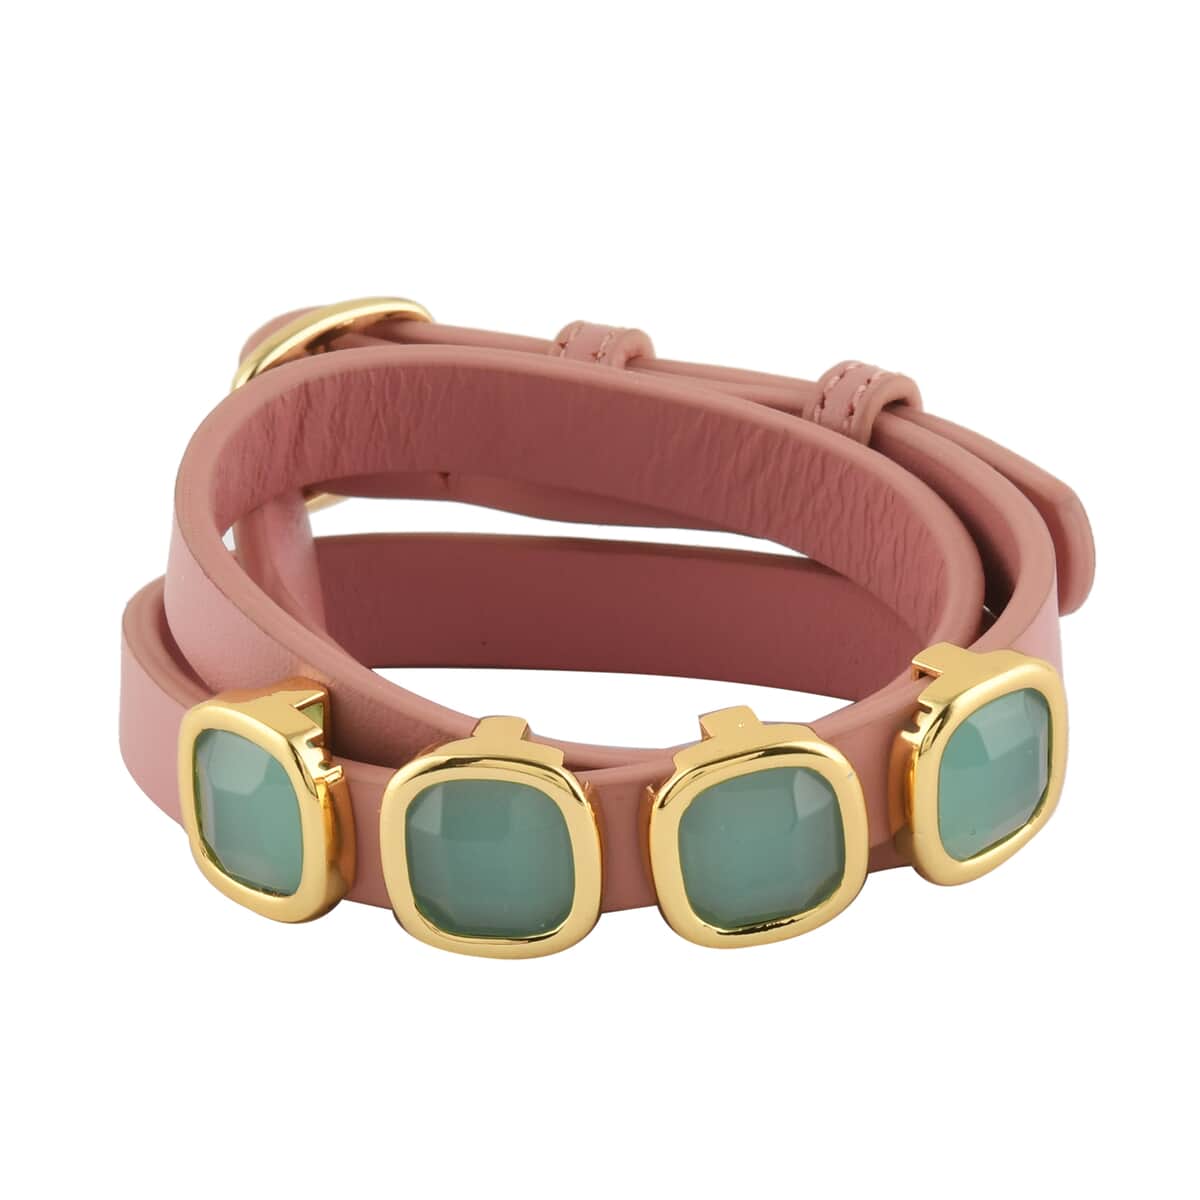 Lulu Dharma Amethyst, Pink Leather Wrap Bracelet (Adjustable) in Goldtone image number 0